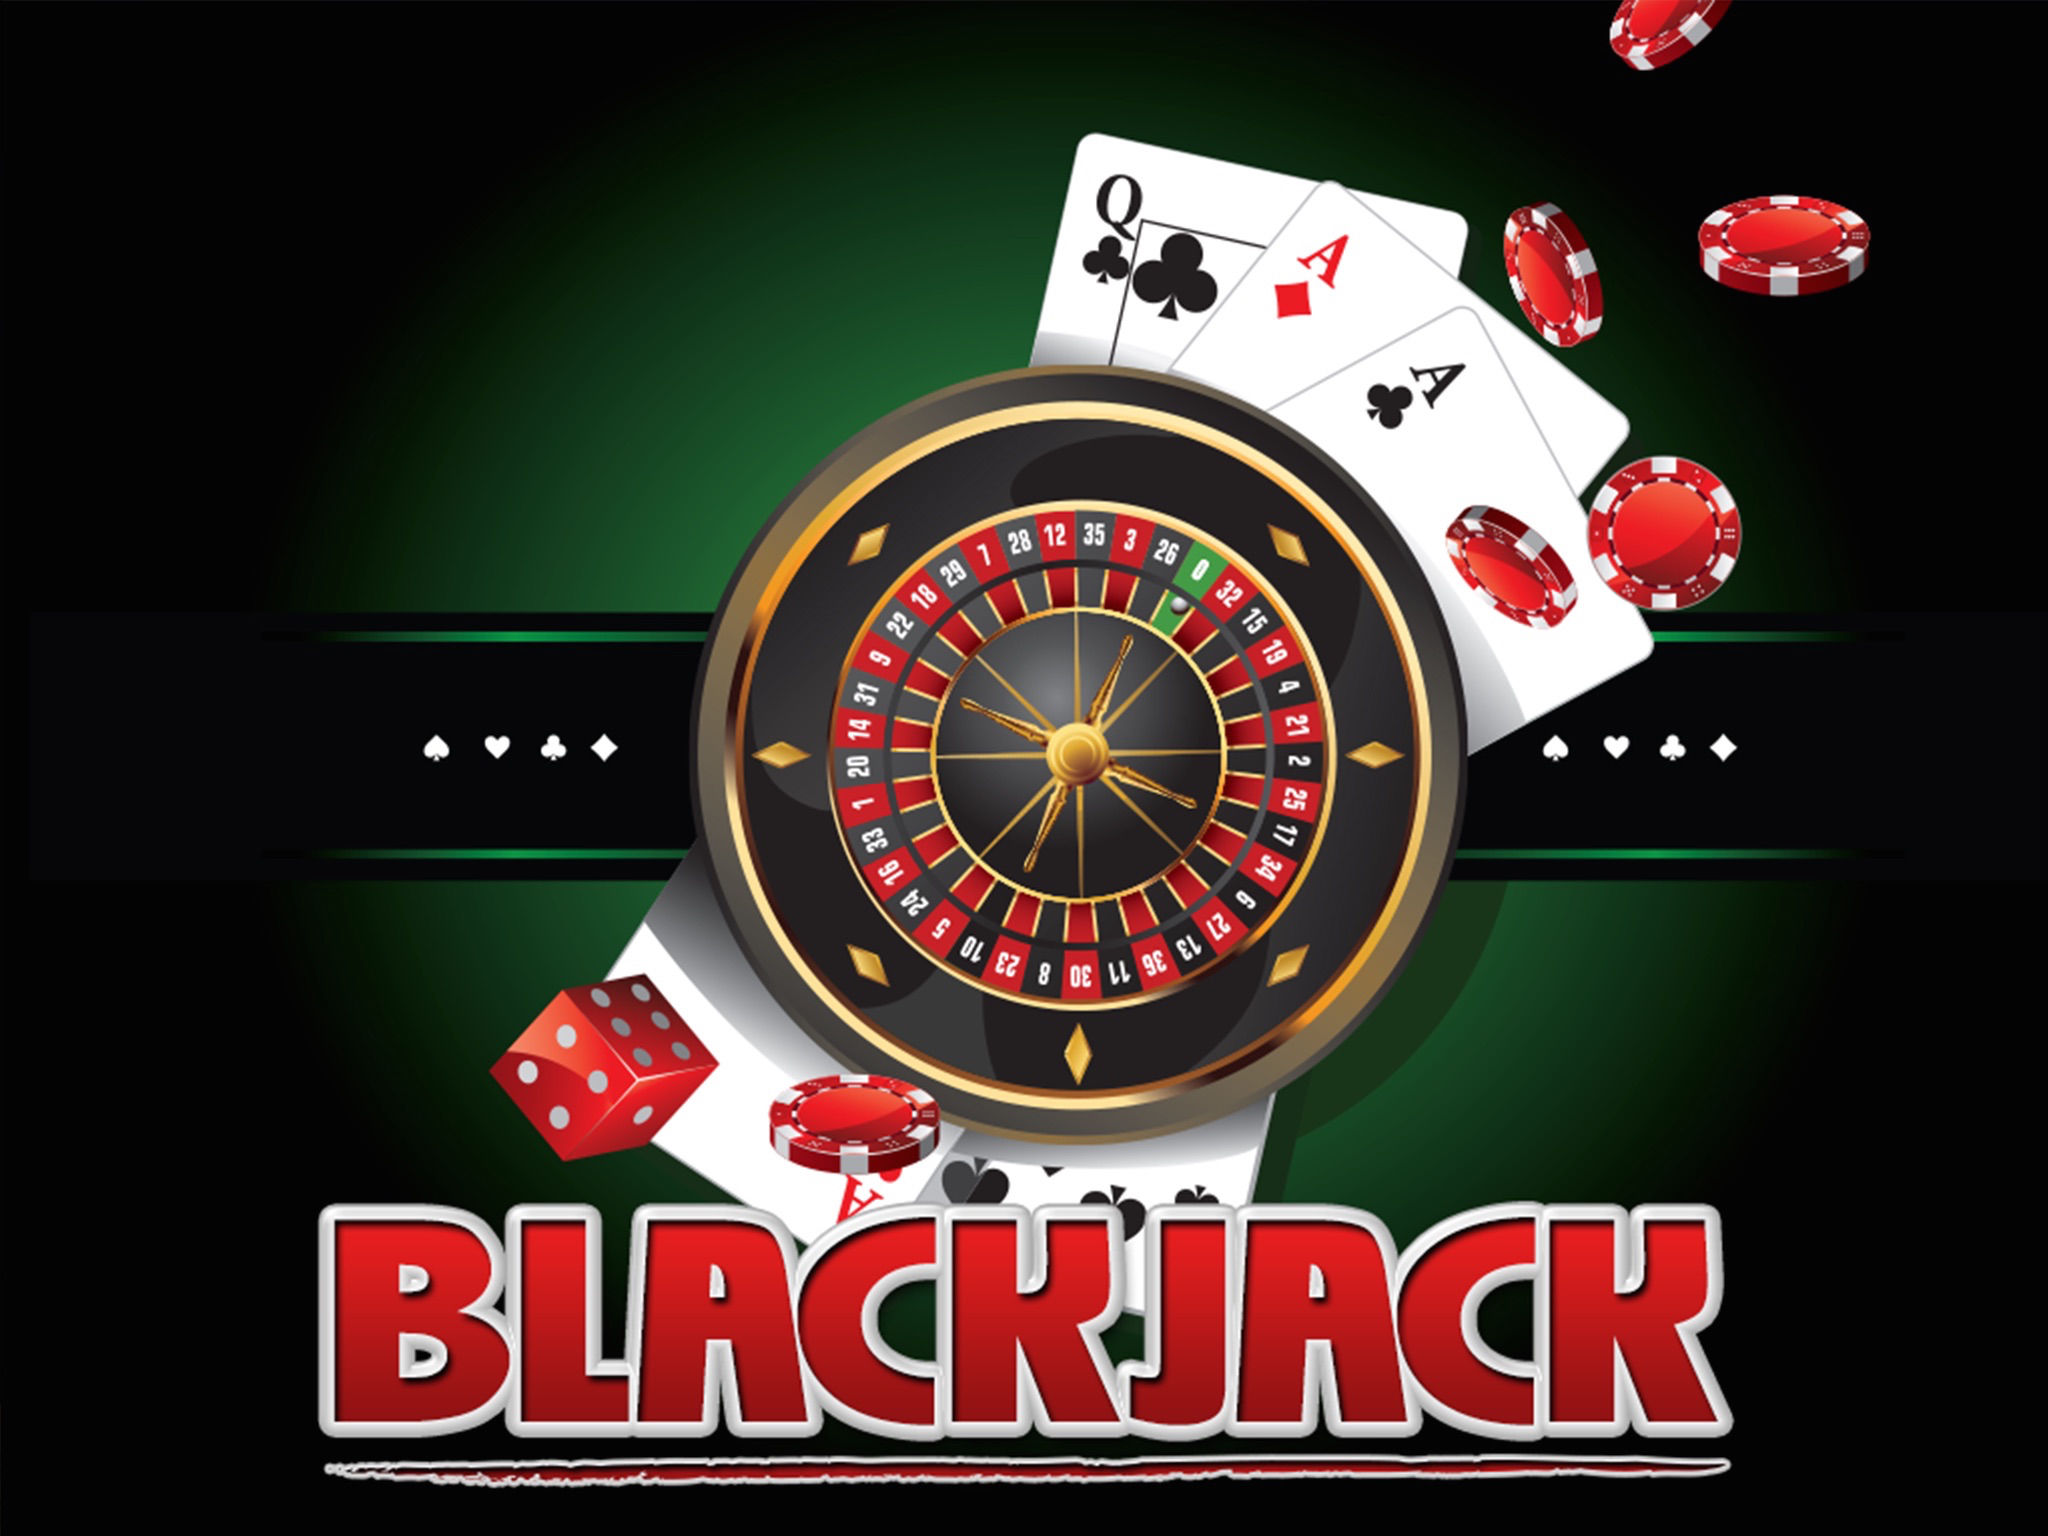 21 blackjack online casino post